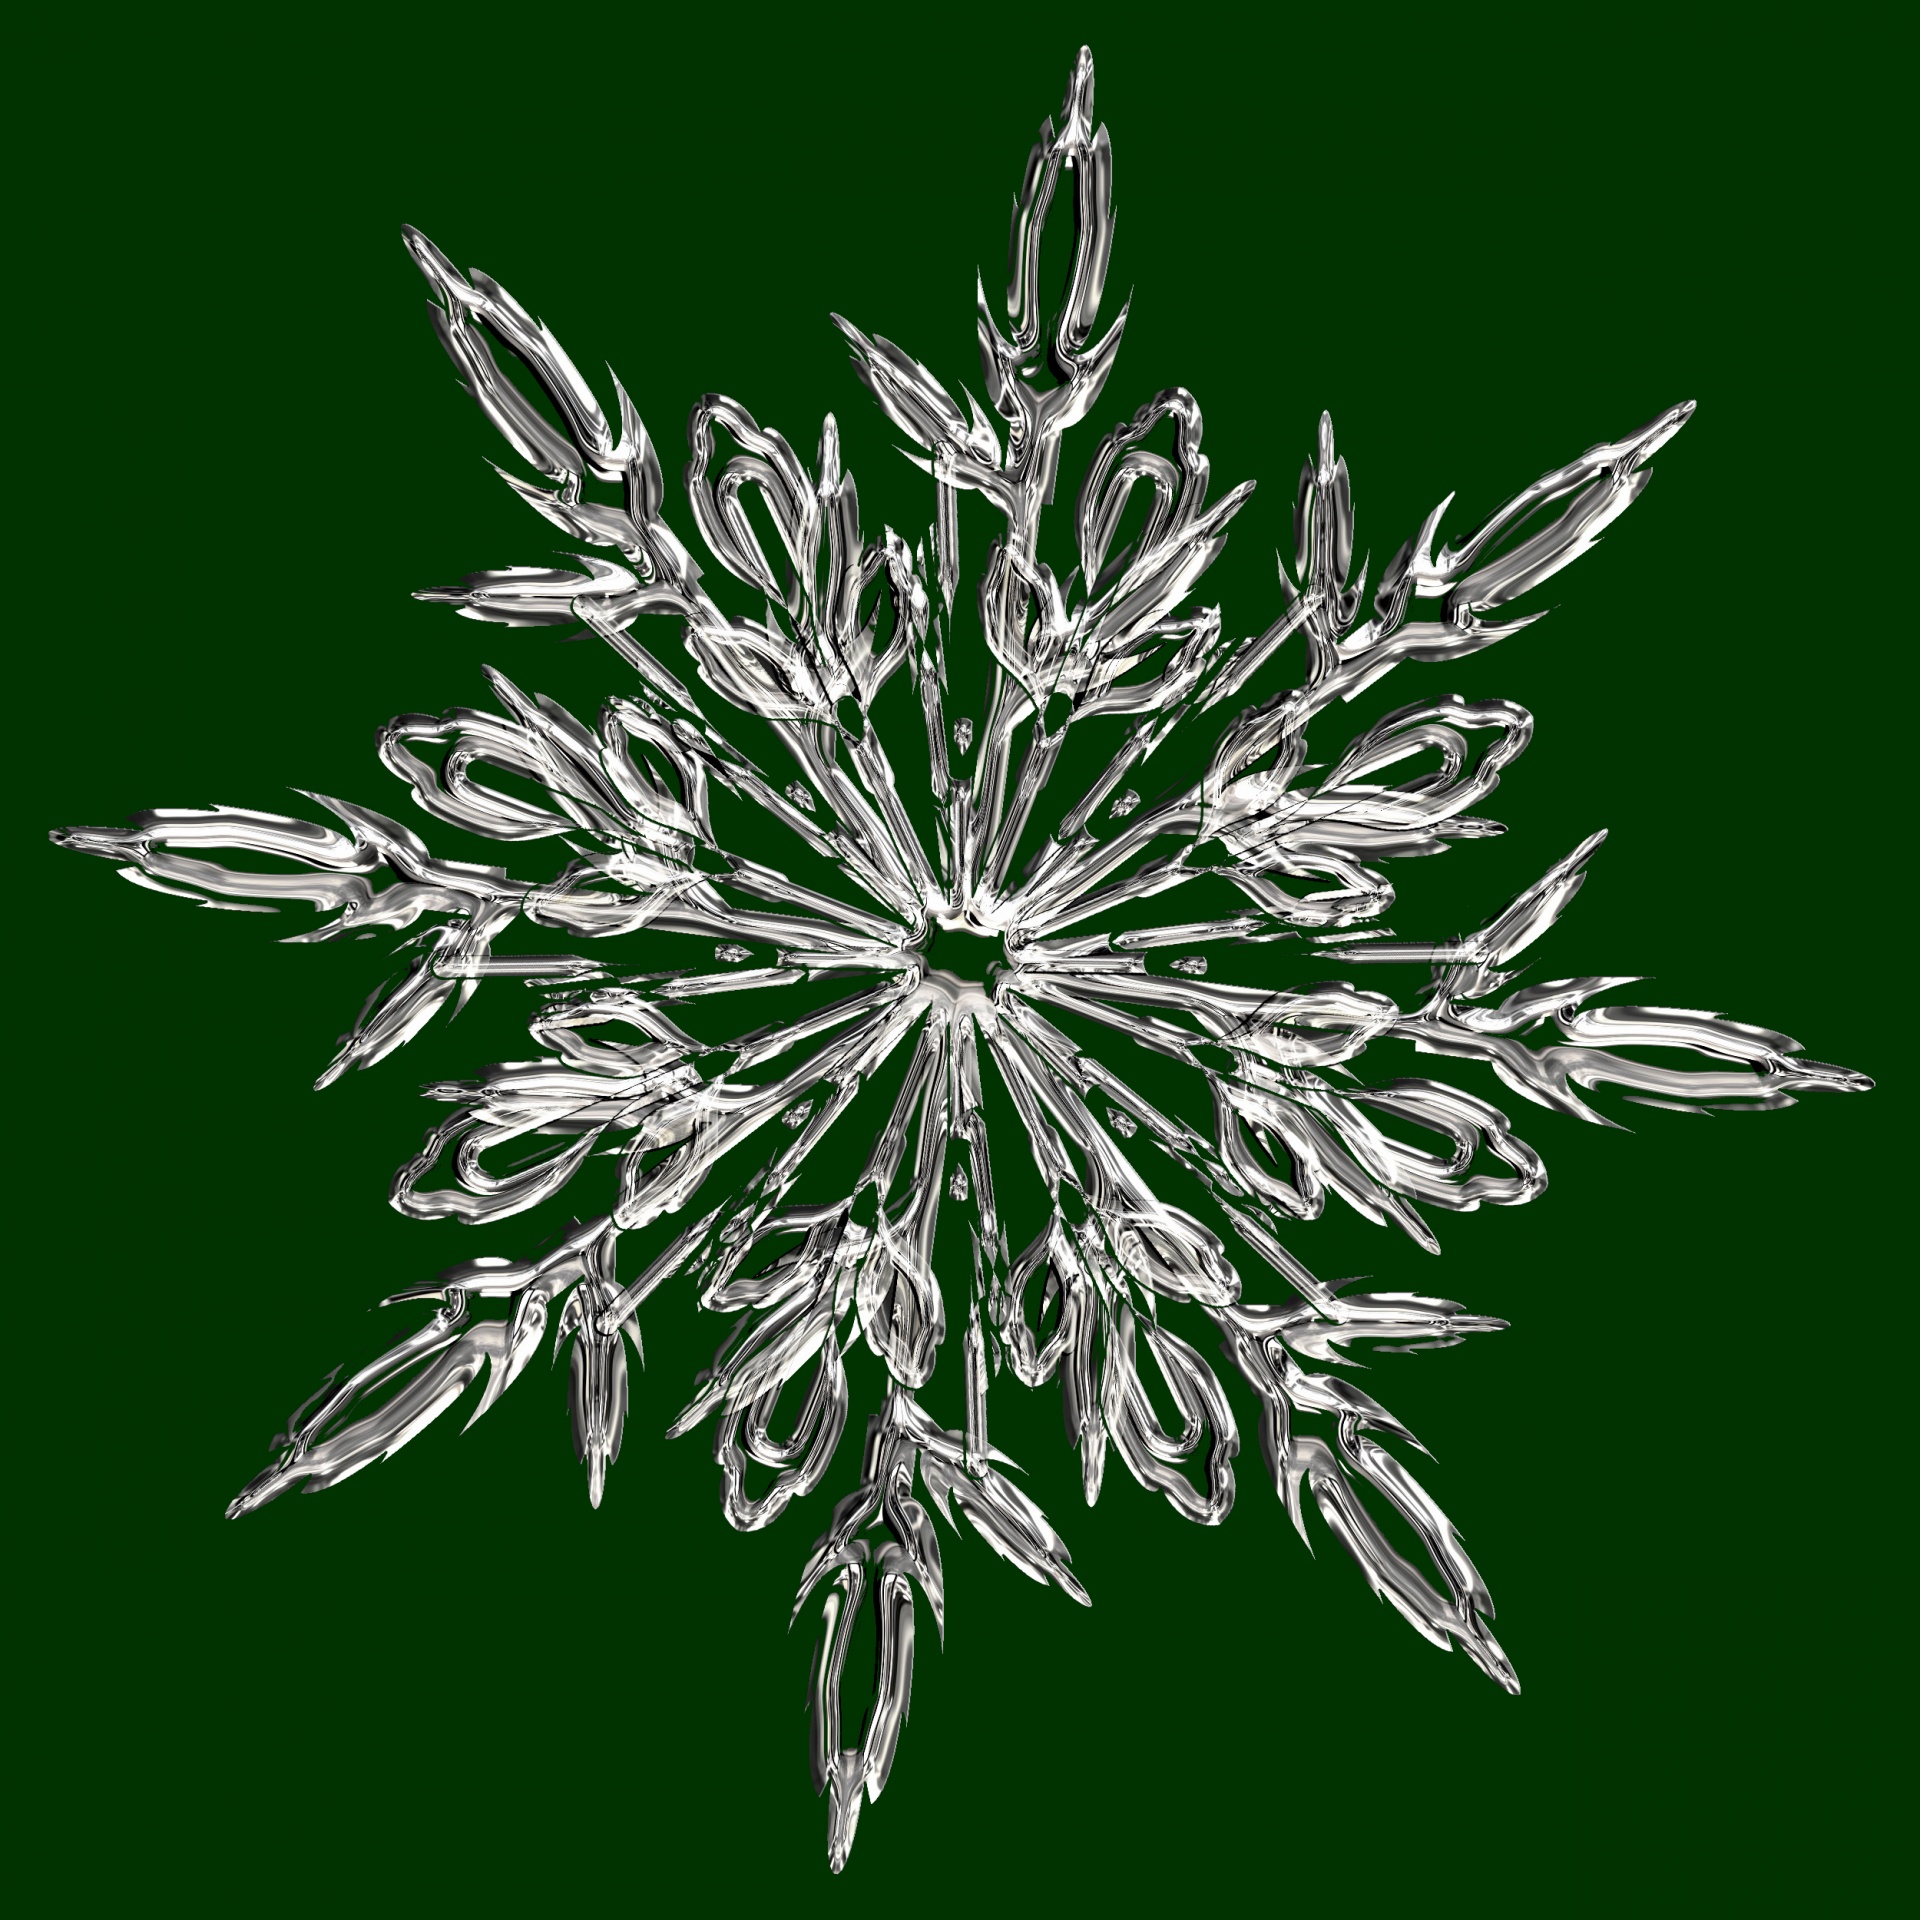 Copo de nieve de cristal verde